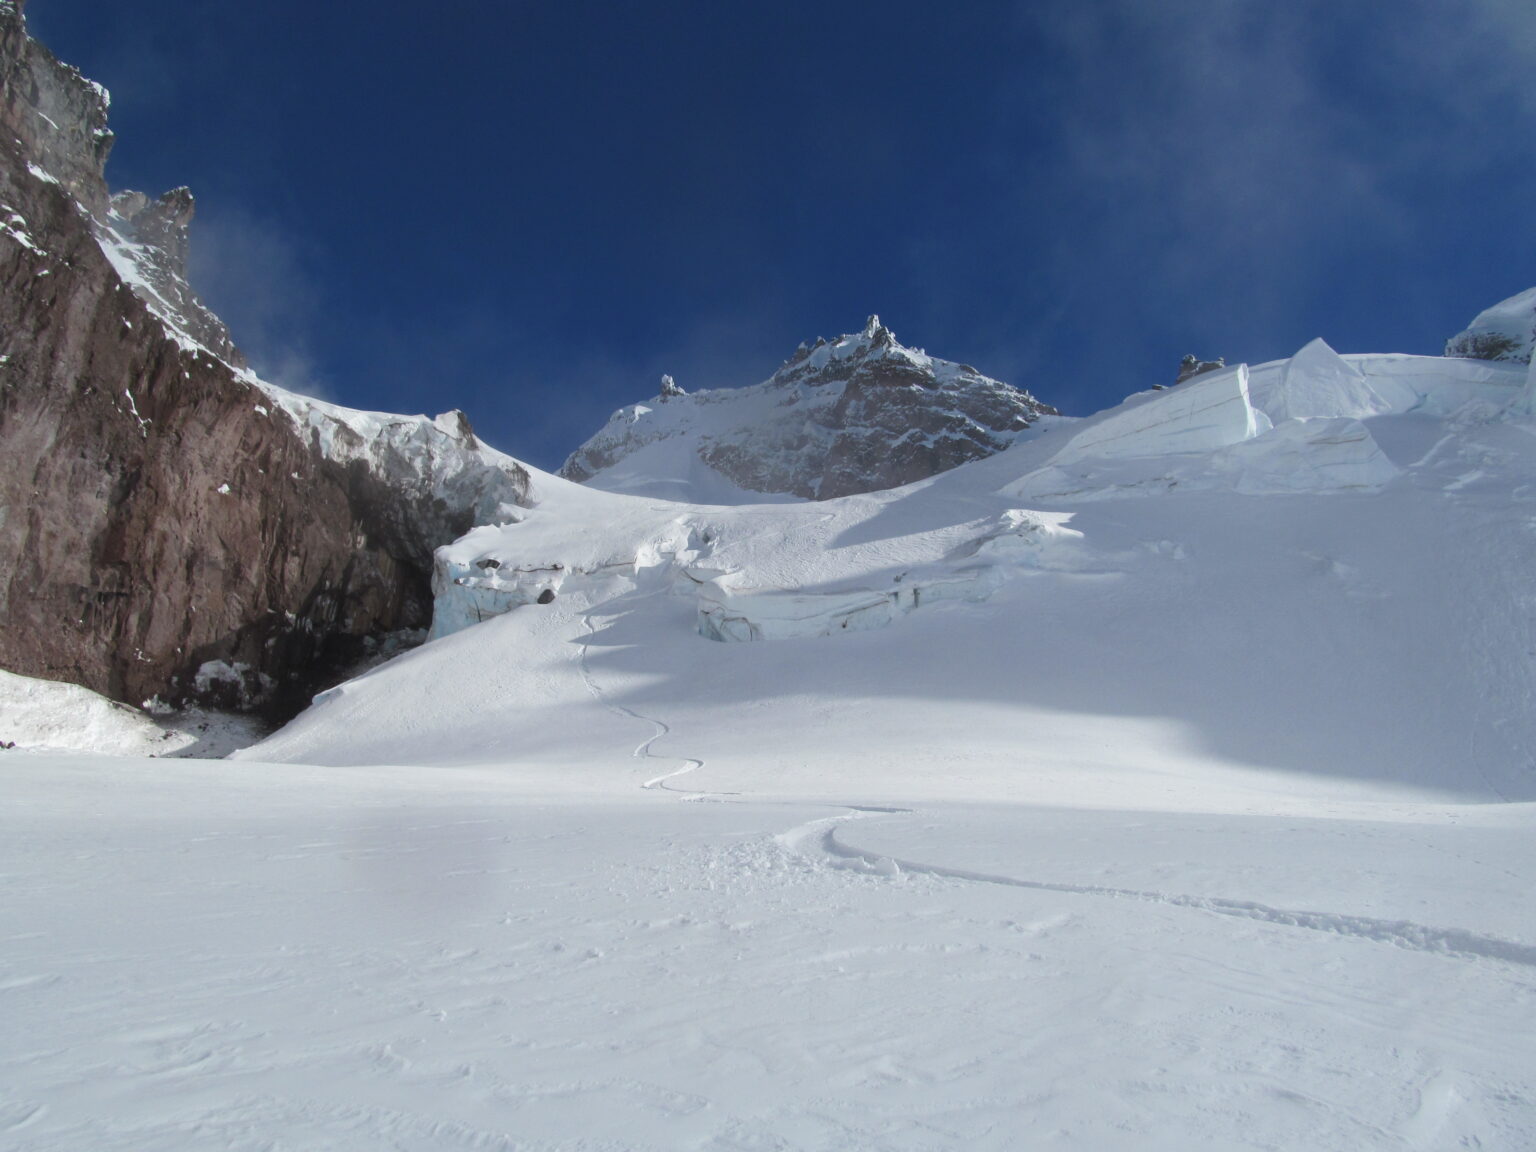 Snowboarding down the Schimitar Glacier on Glacier Peak